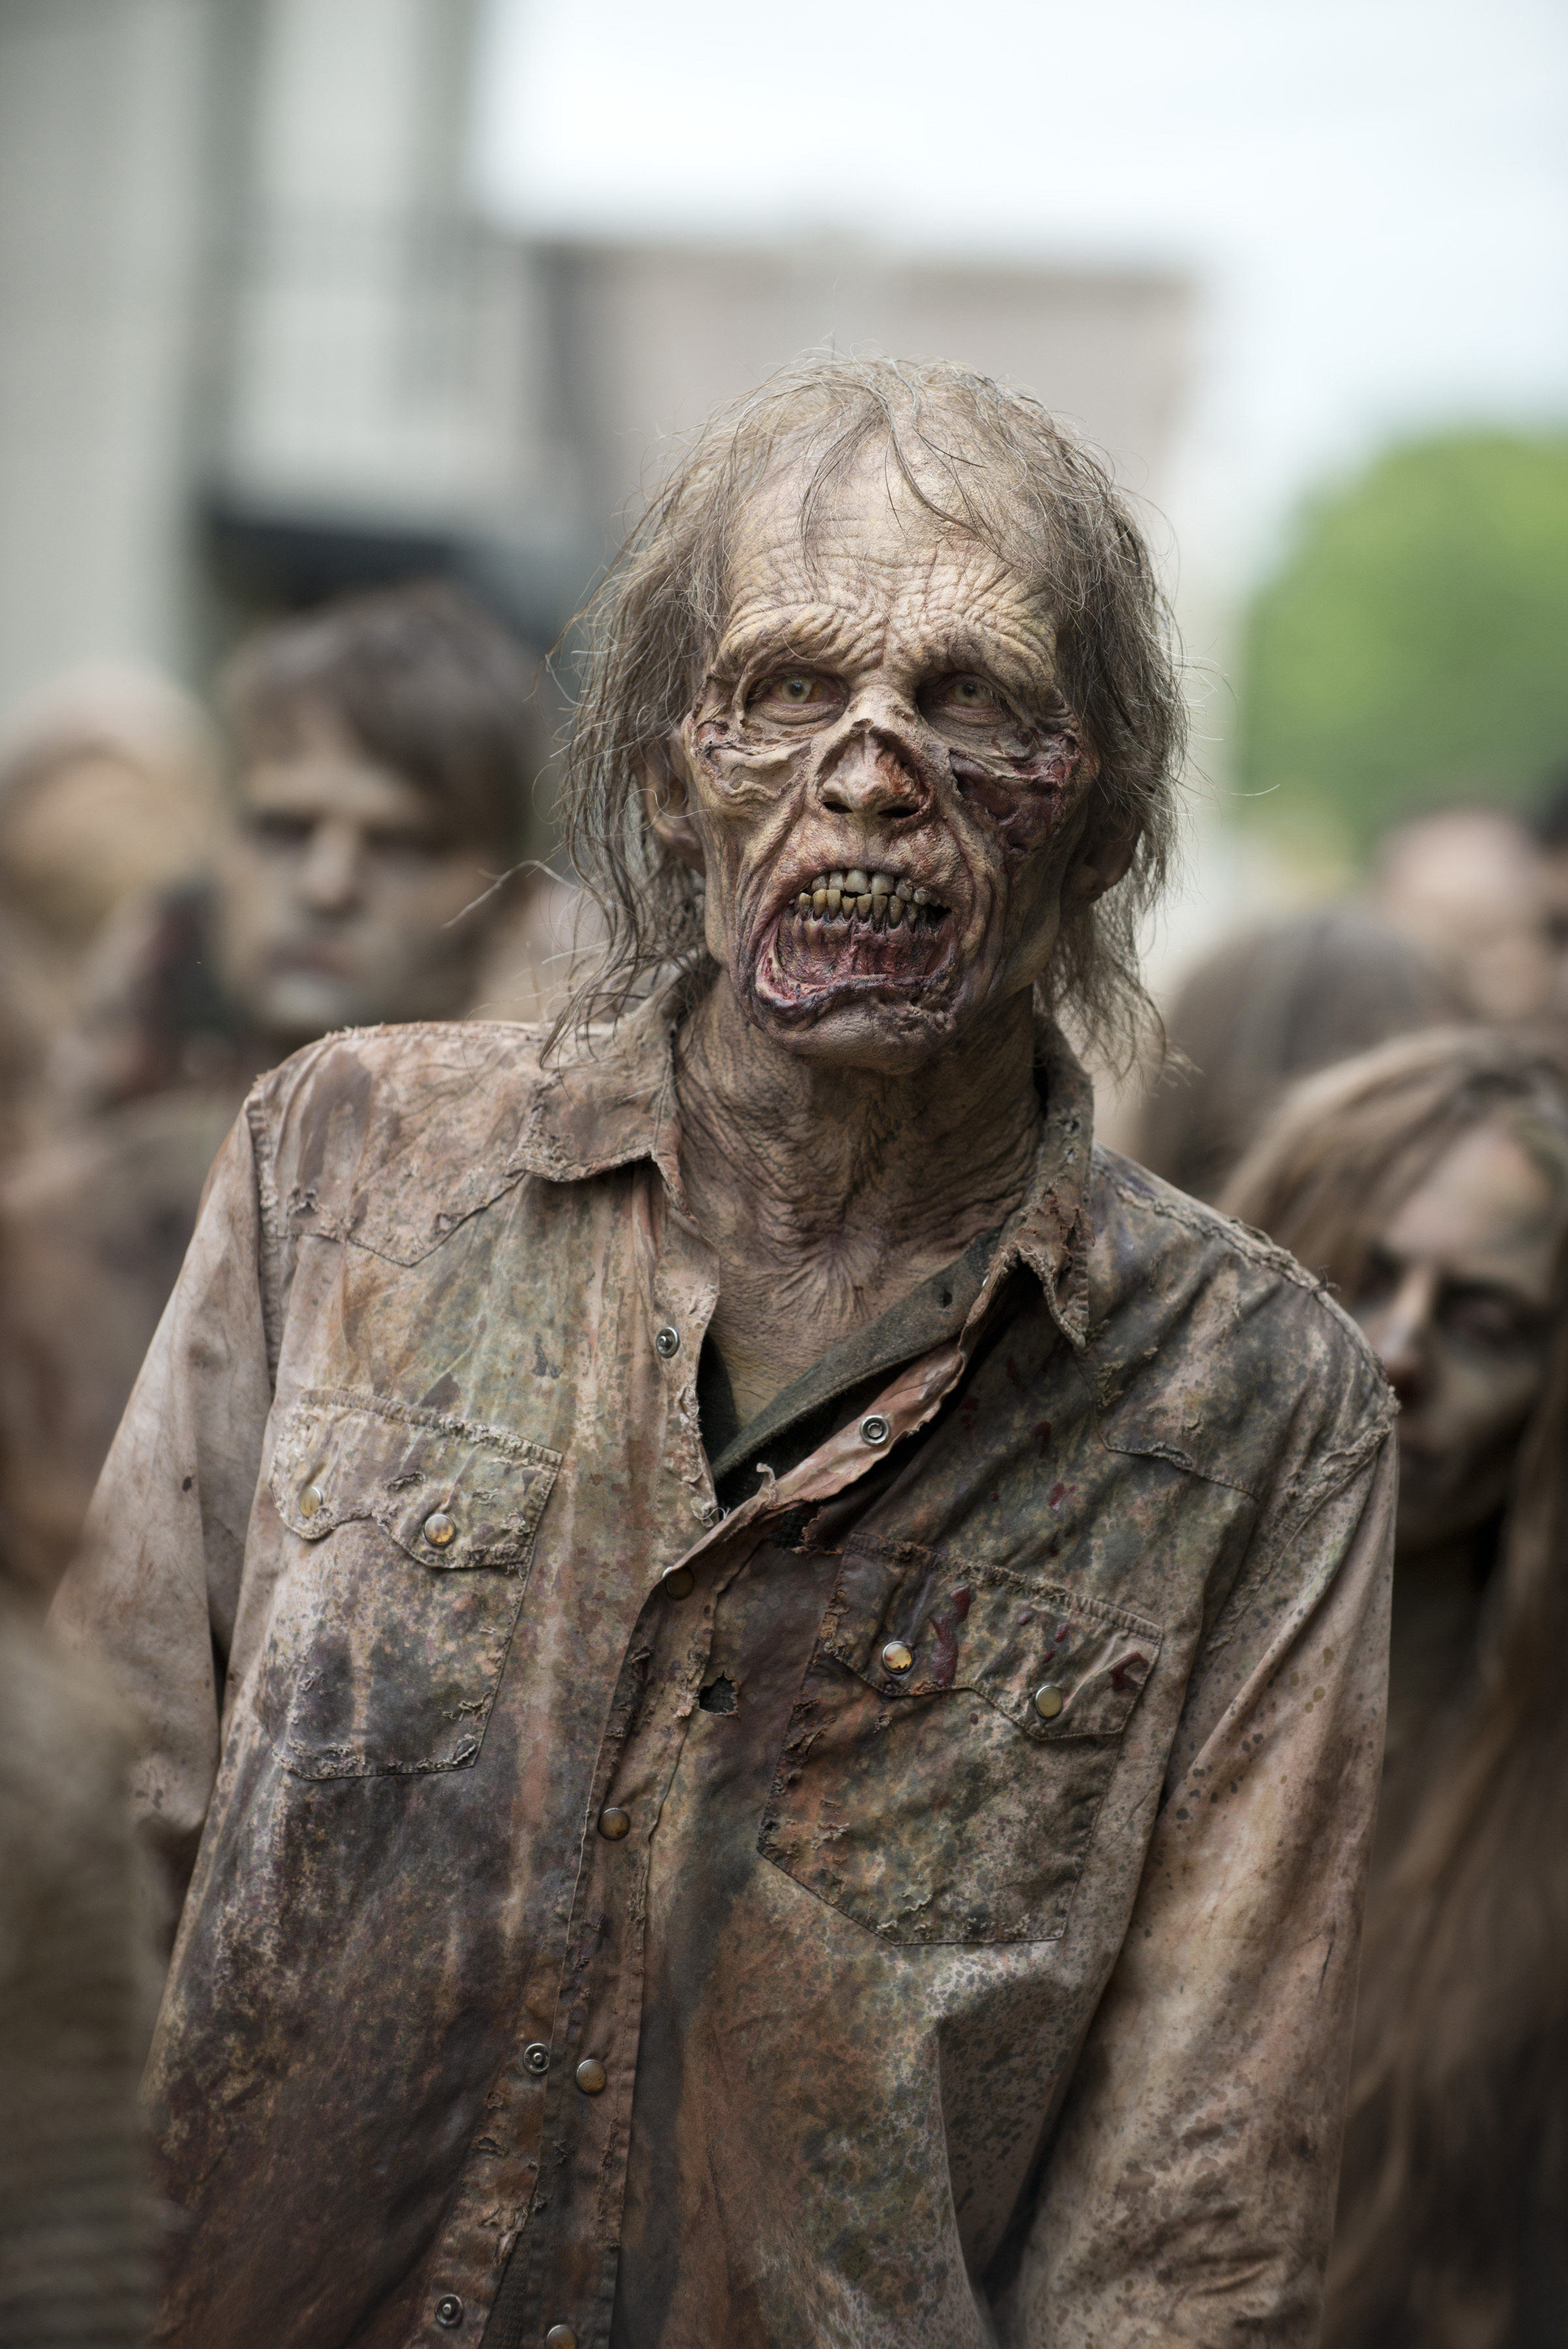 Zumbi da série de TV "The Walking Dead". Fotografia de Gene Page, da emissora AMC.